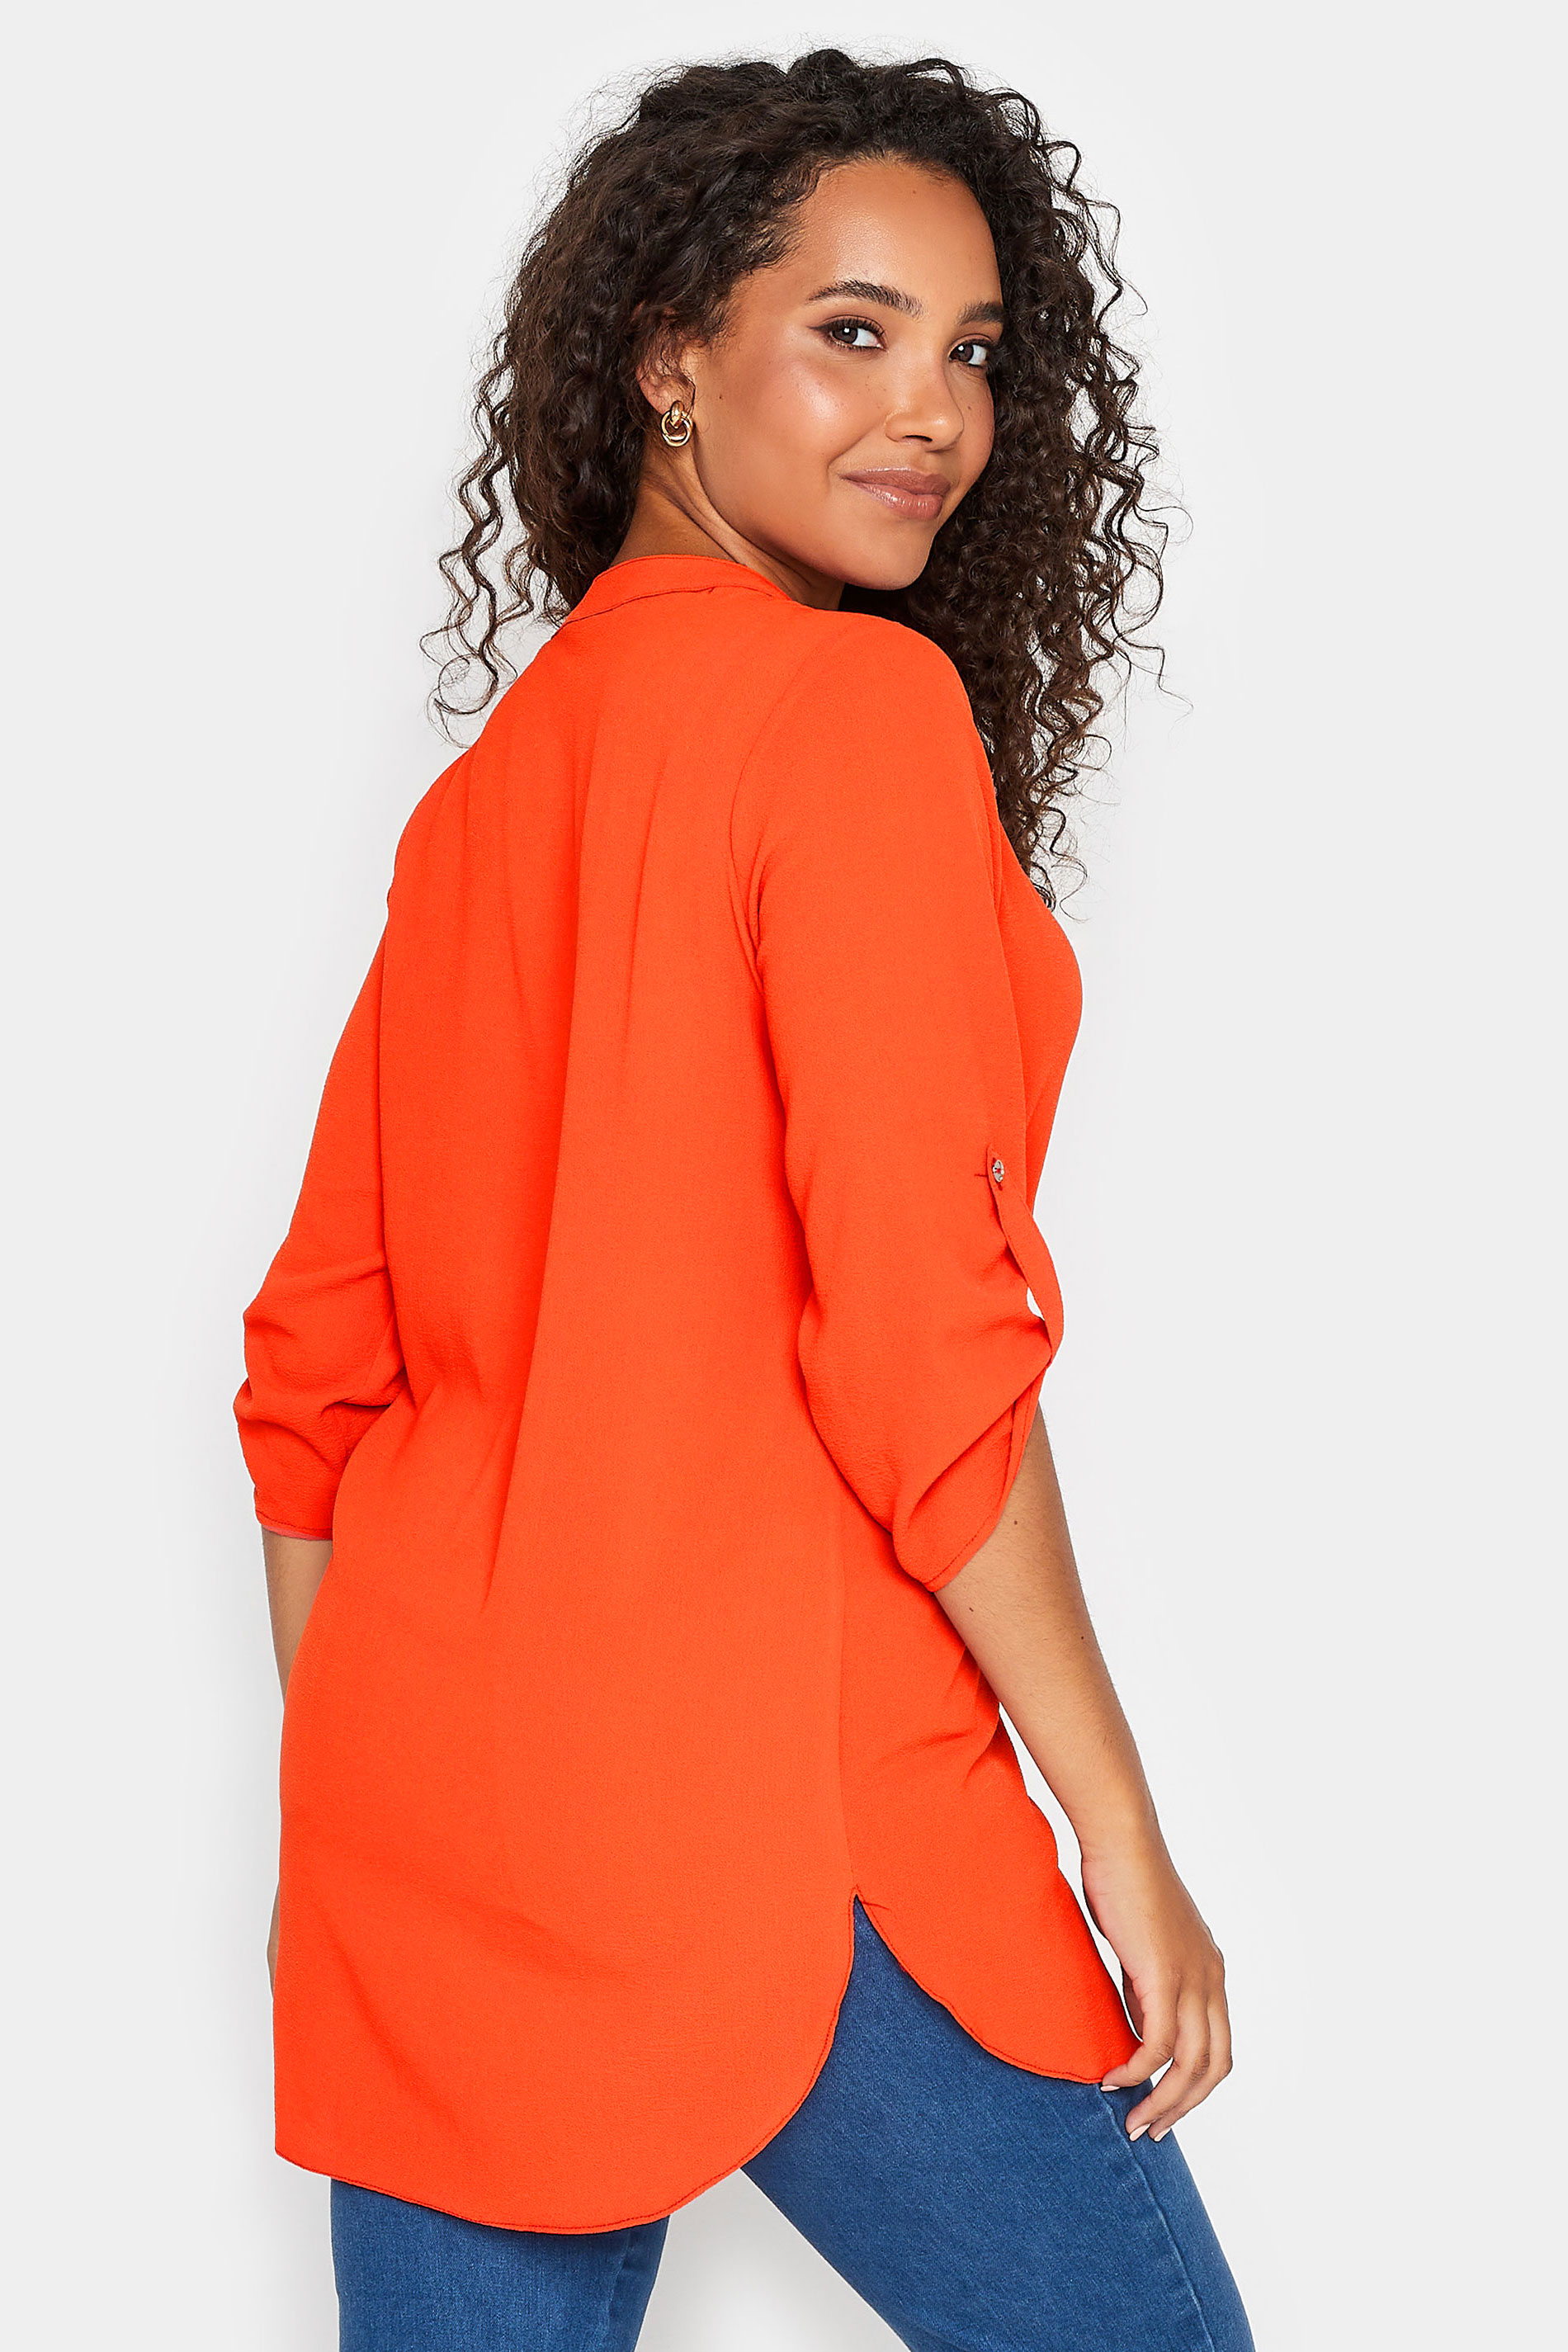 M&Co Bright Orange Statement Button Tab Sleeve Blouse | M&Co 3